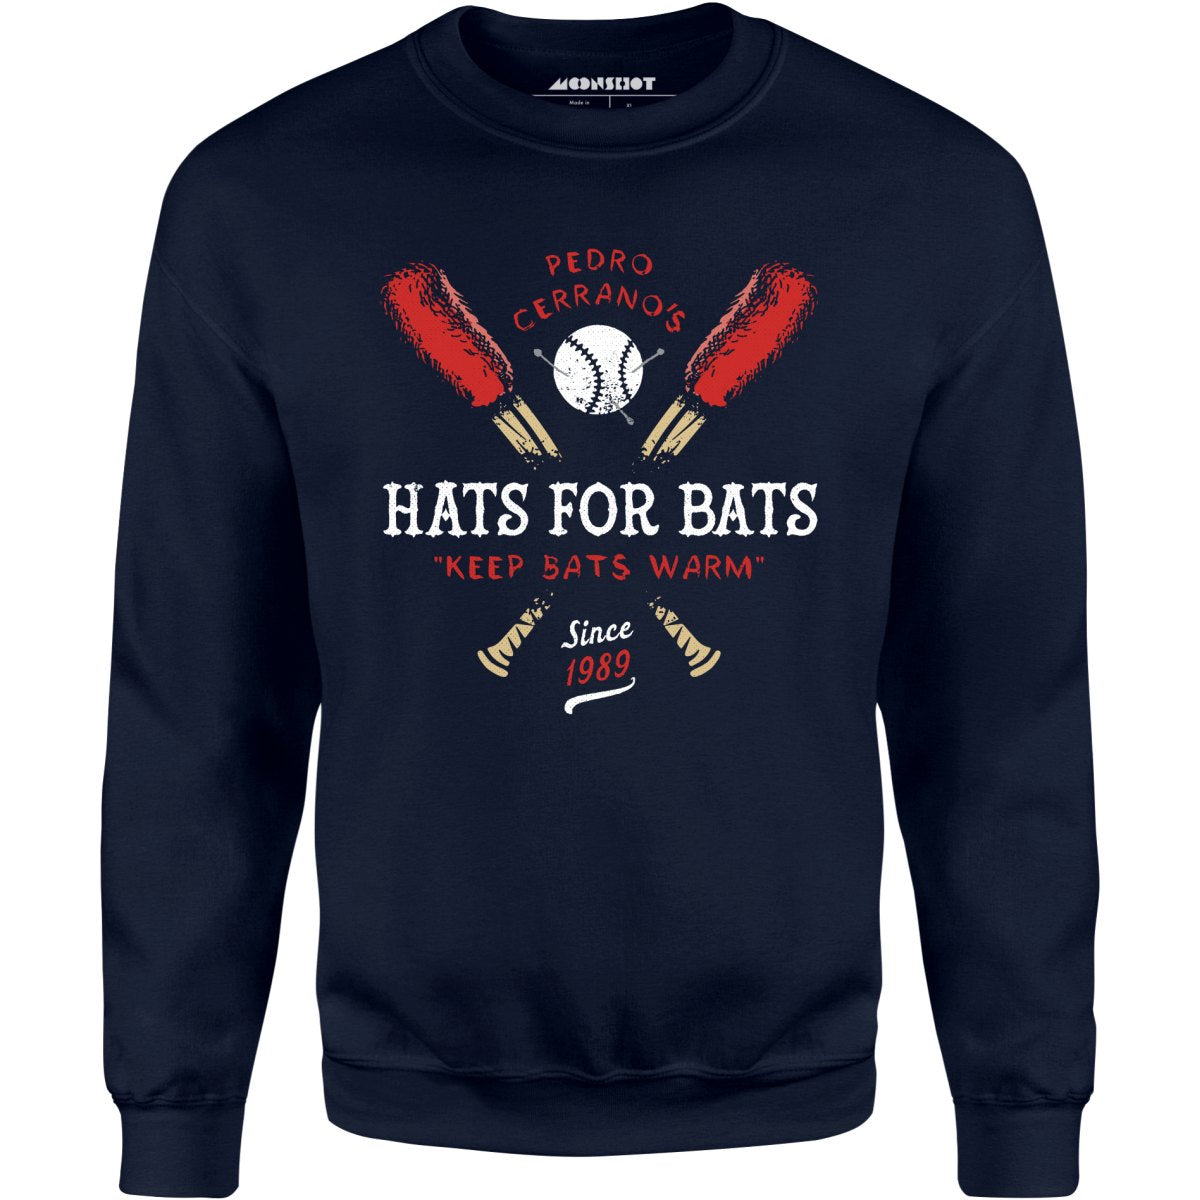 Pedro Cerrano's Hats for Bats - Unisex Sweatshirt